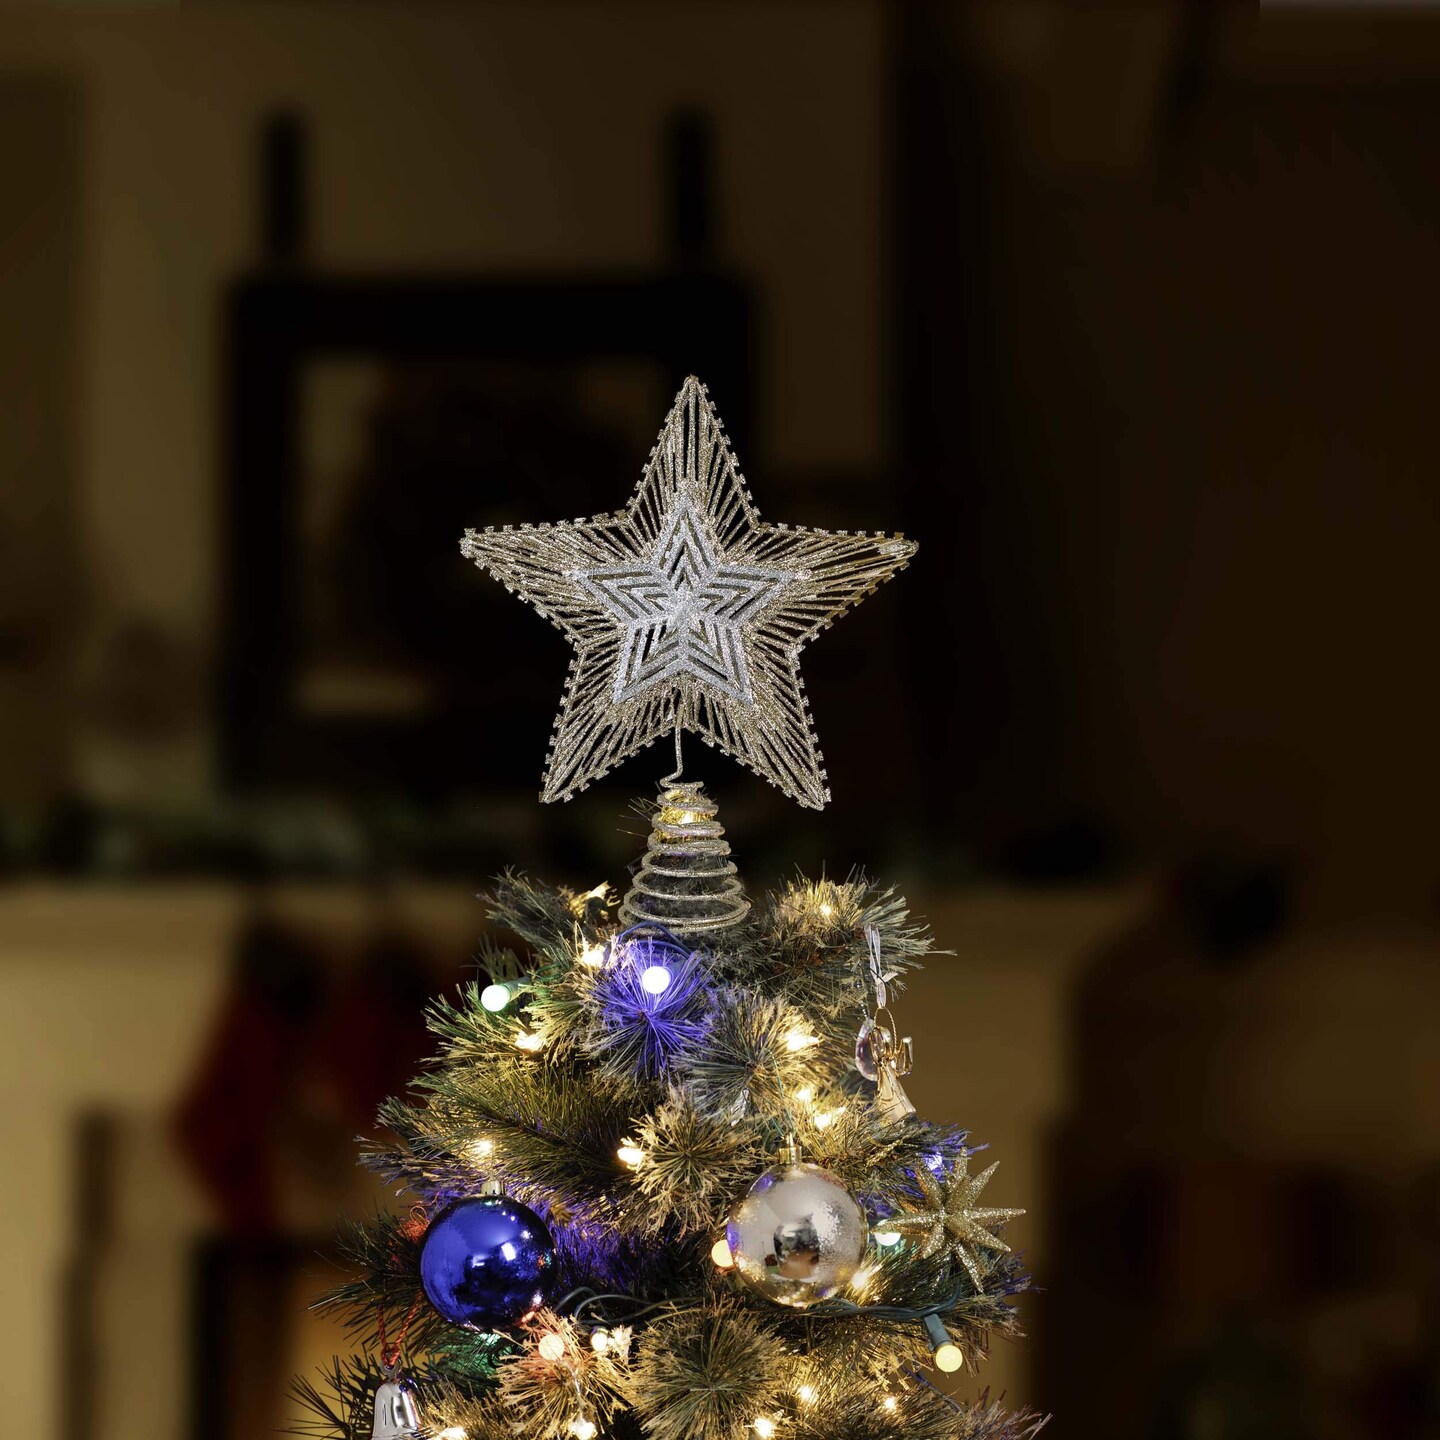 Ornativity Christmas Glitter Star Tree Topper - Rose Gold and Silver Bethlehem Star Ornament